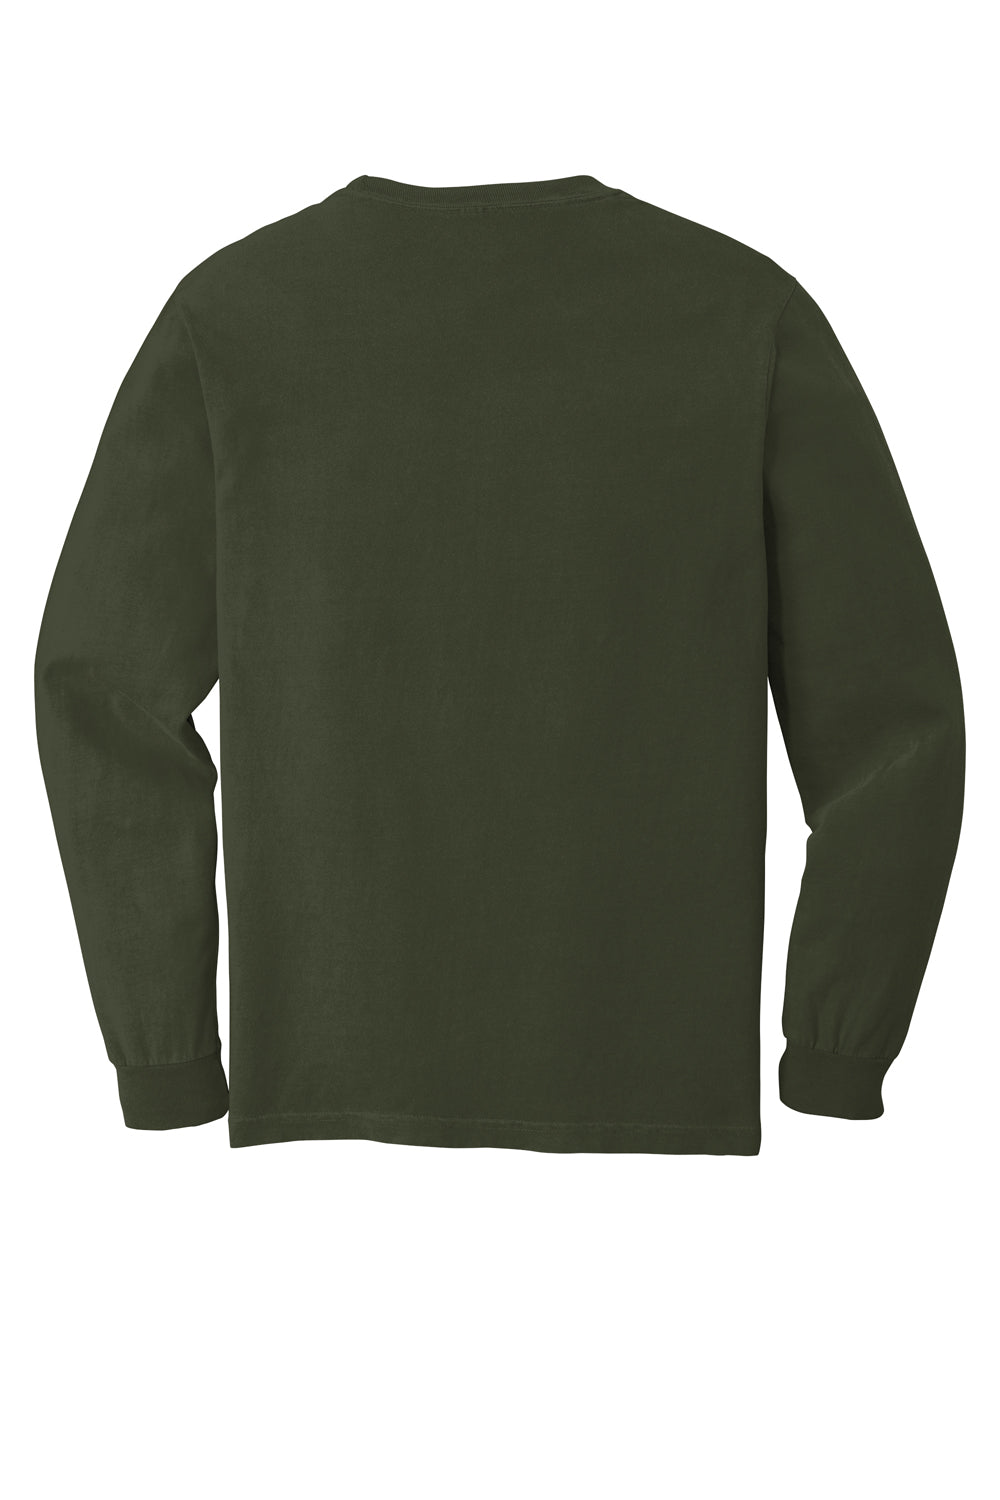 Comfort Colors 6014/C6014 Mens Long Sleeve Crewneck T-Shirt Hemp Green Flat Back